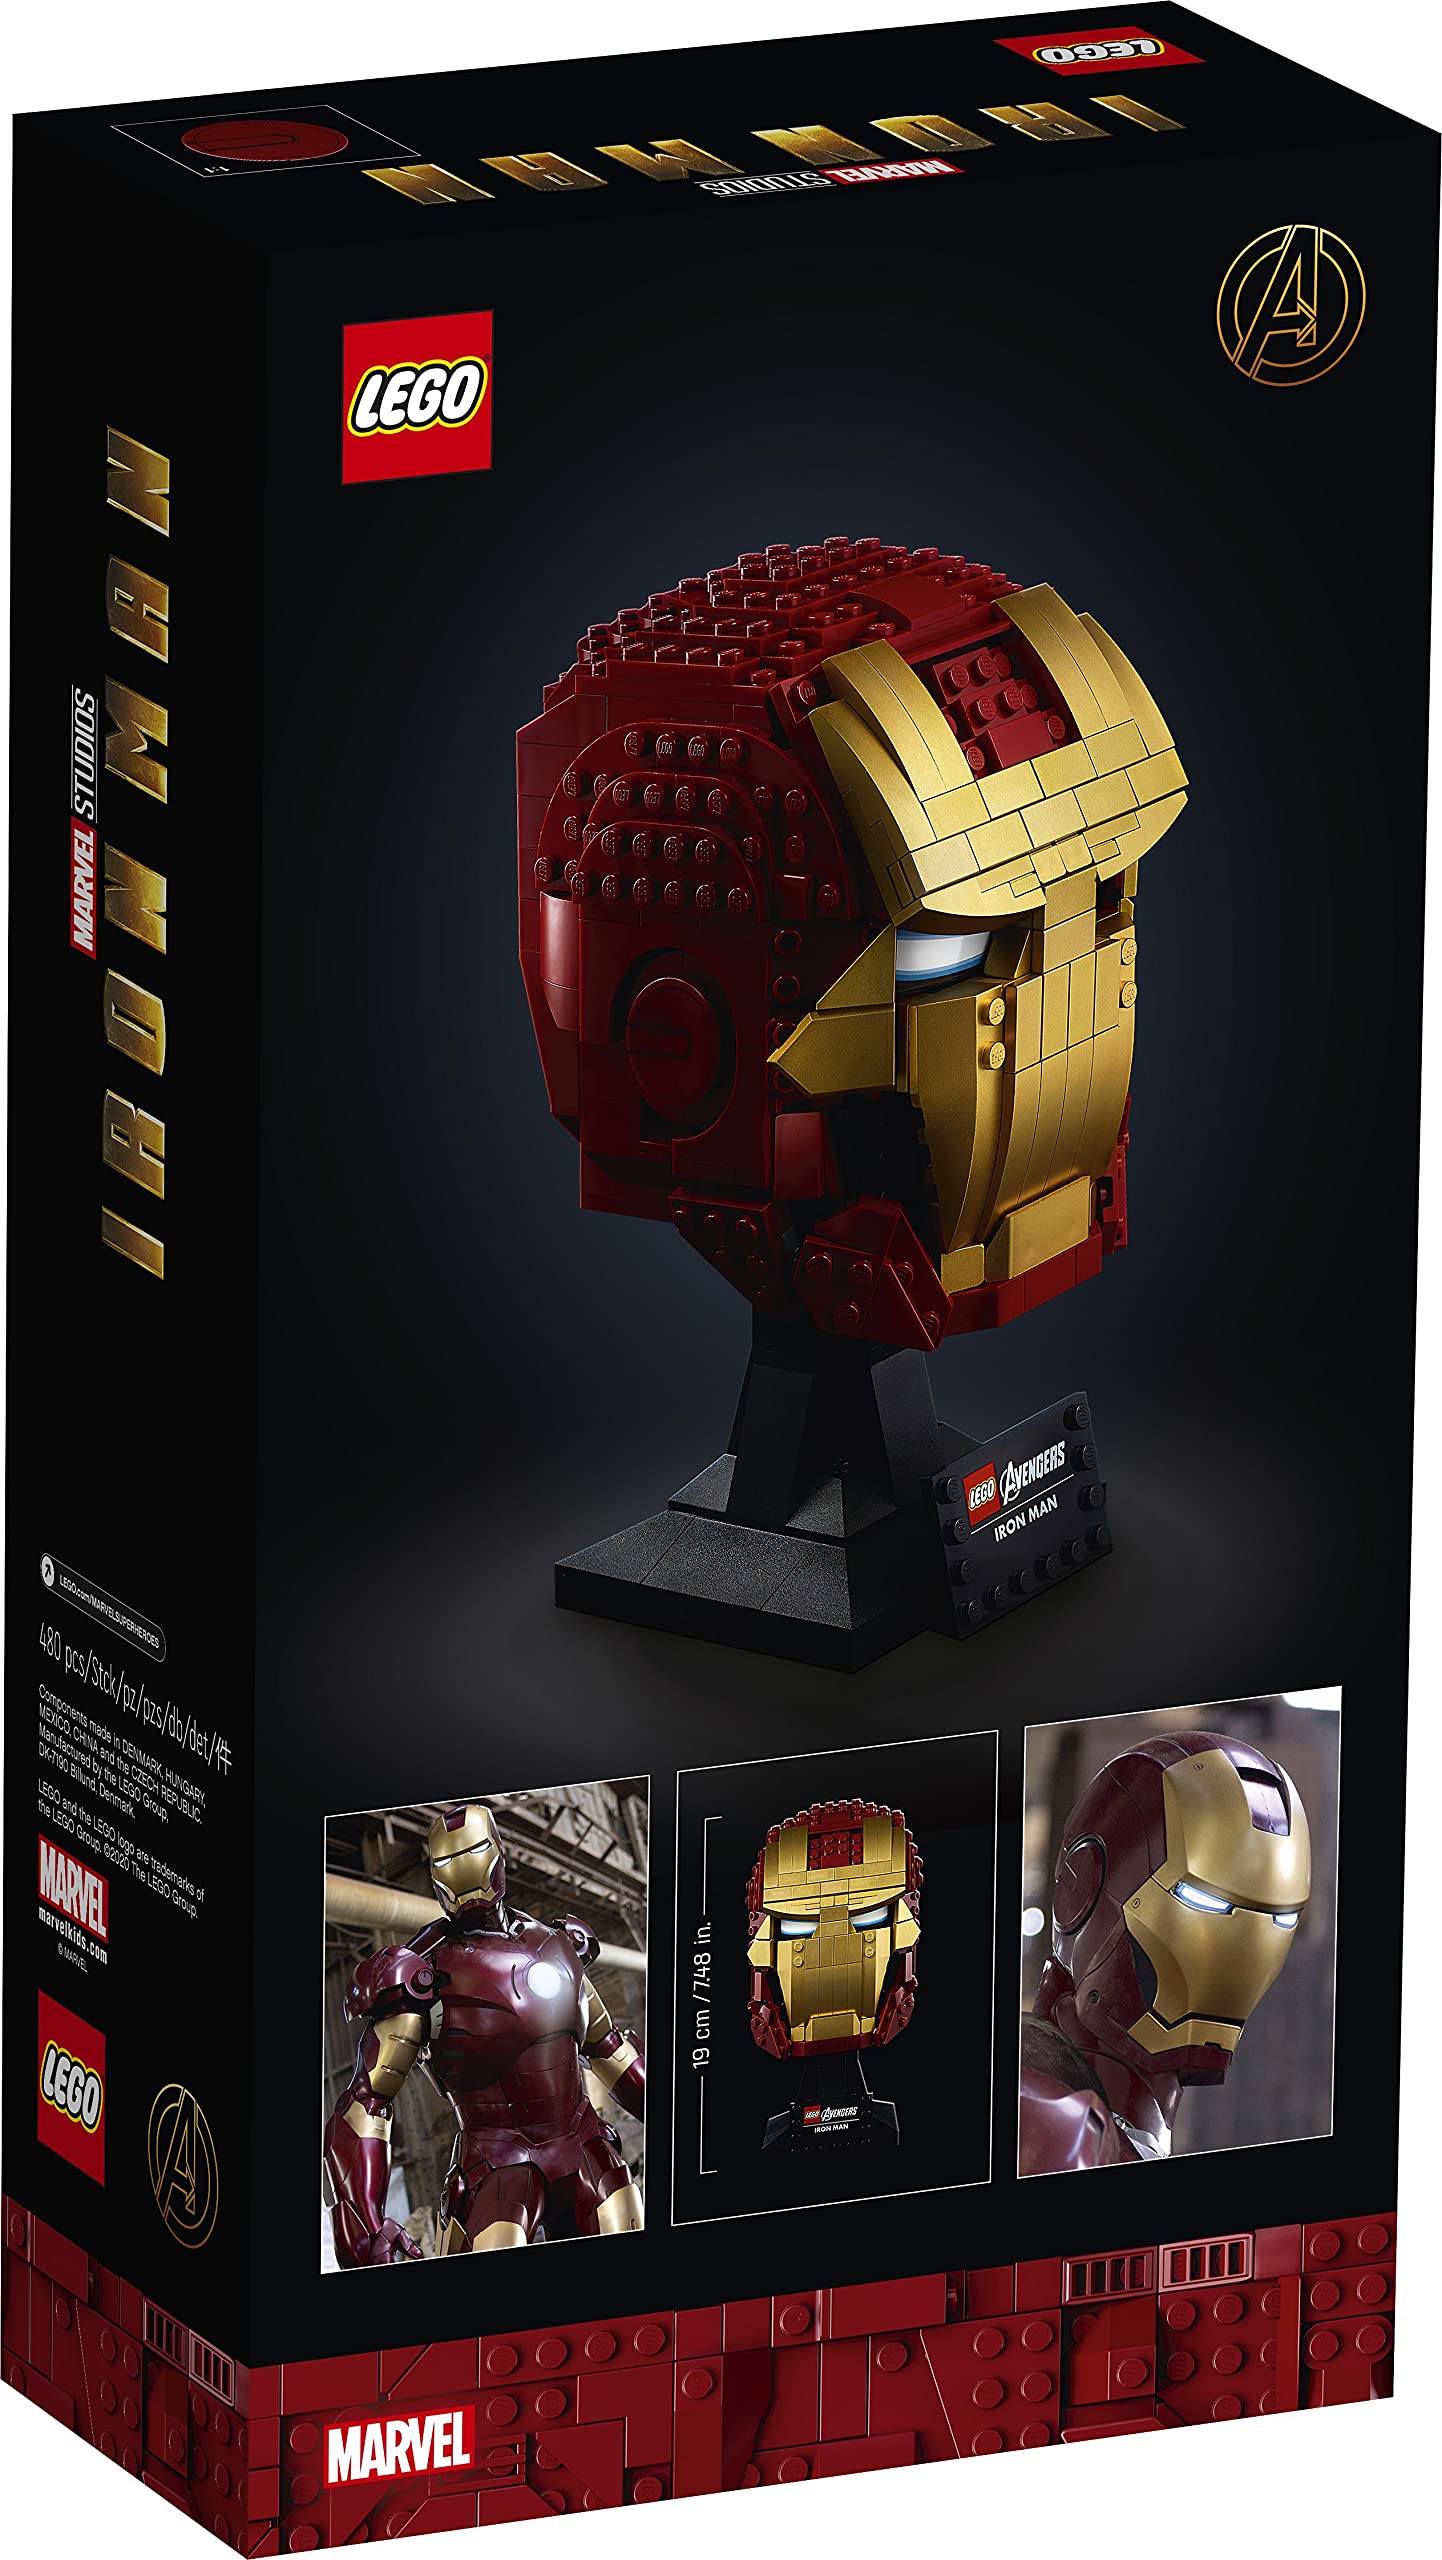 *OPEN BOX* LEGO Marvel Super Heroes Iron Man Helmet 76165 (7690405806318)